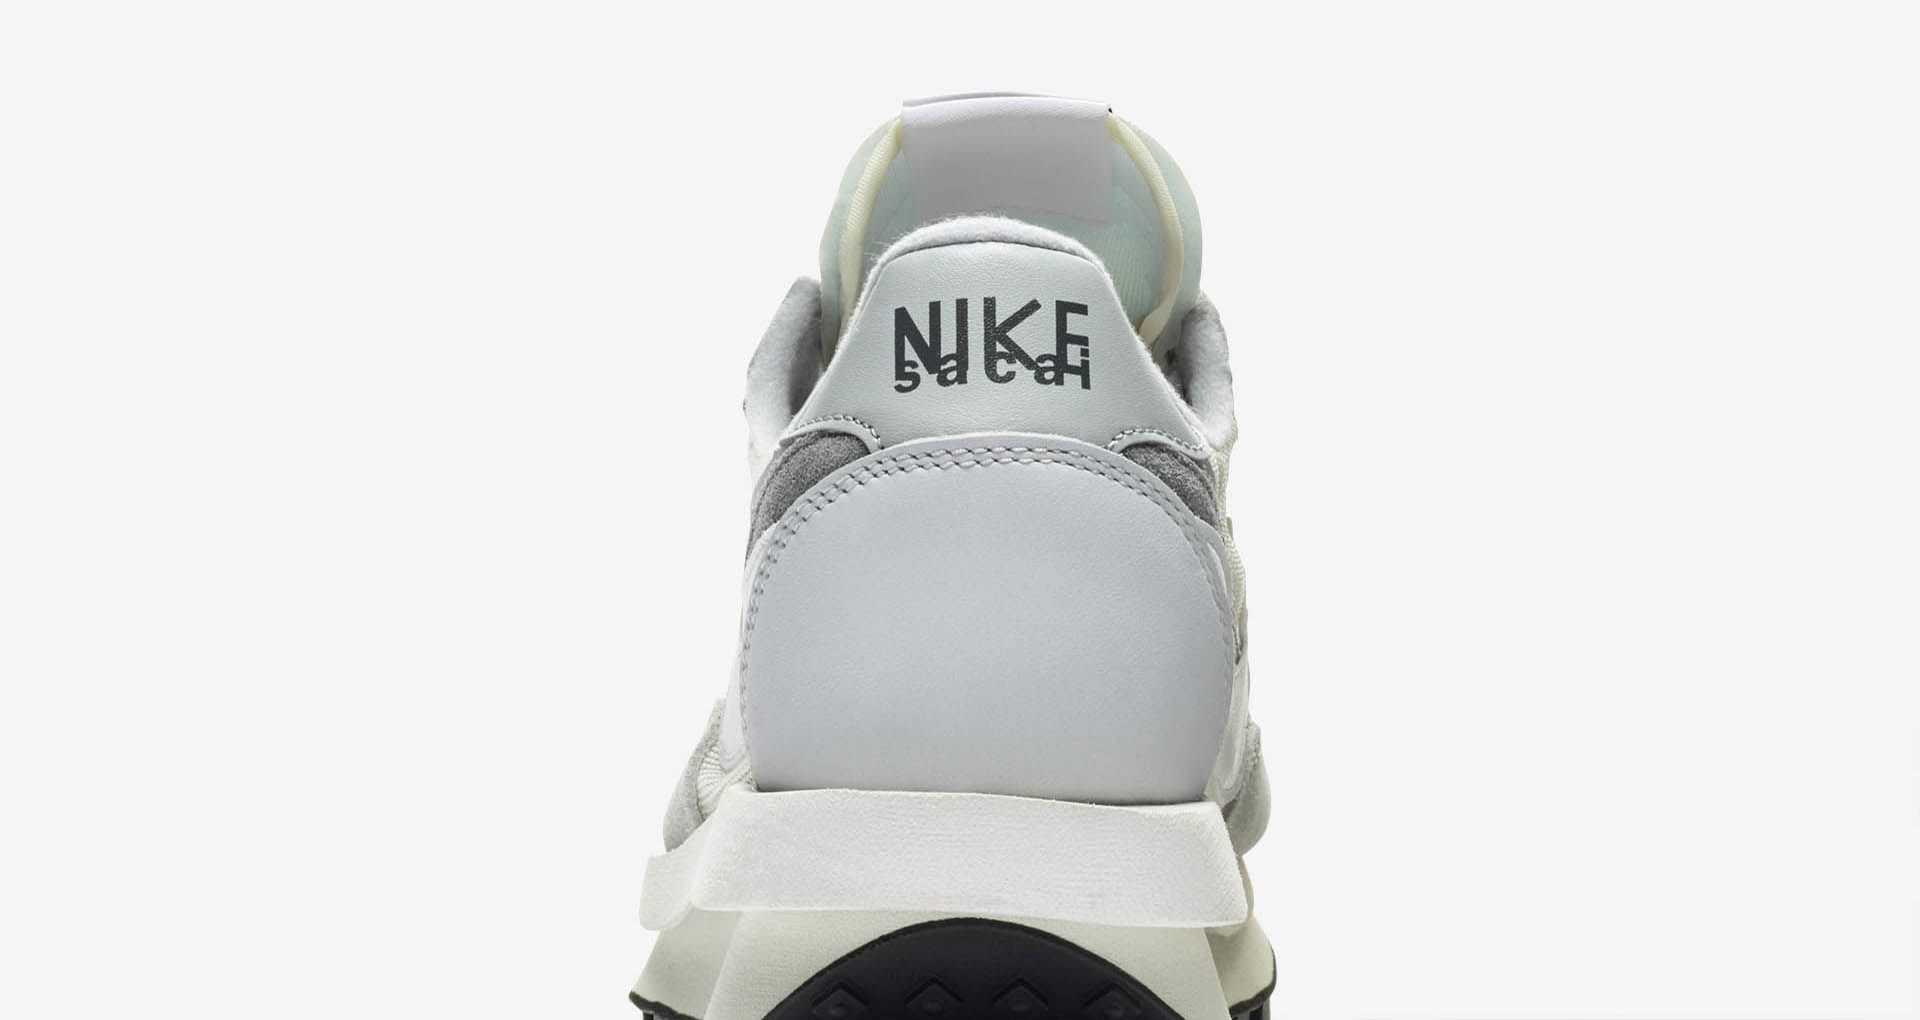 sacai x Nike LDWaffle 'Summit White' Release Date. Nike SNKRS PH